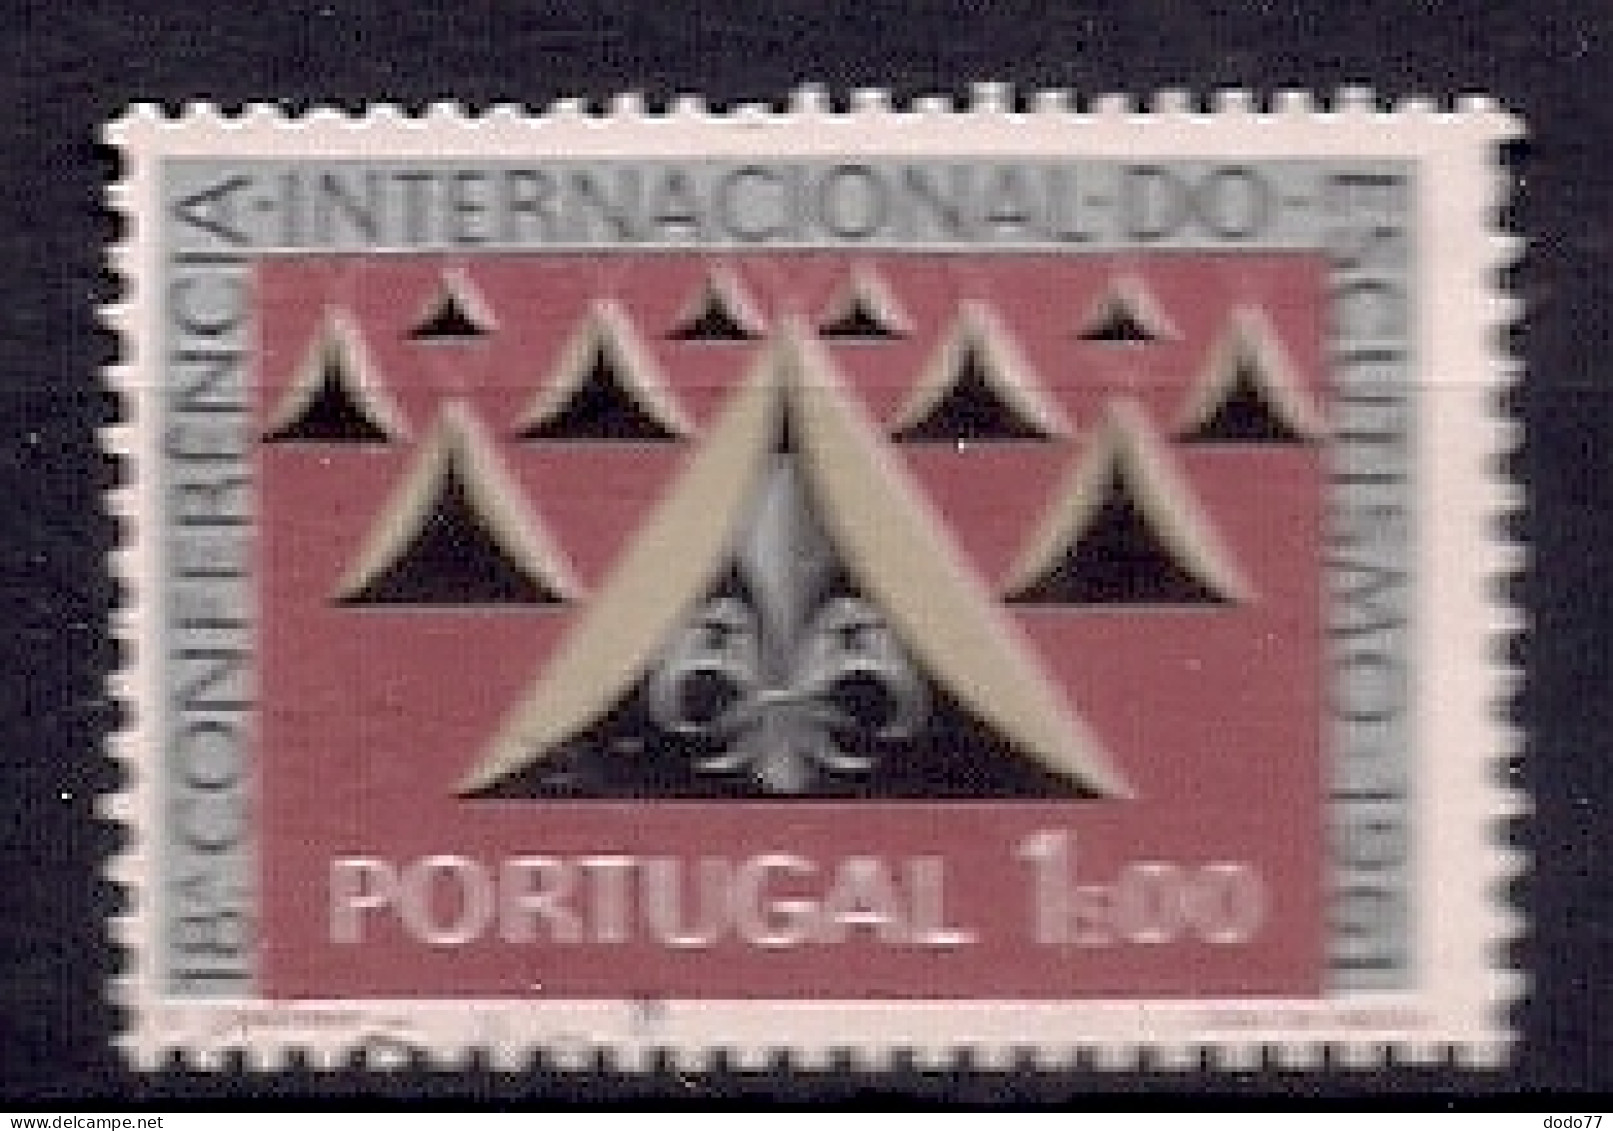 PORTUGAL   N°   900   OBLITERE - Gebraucht